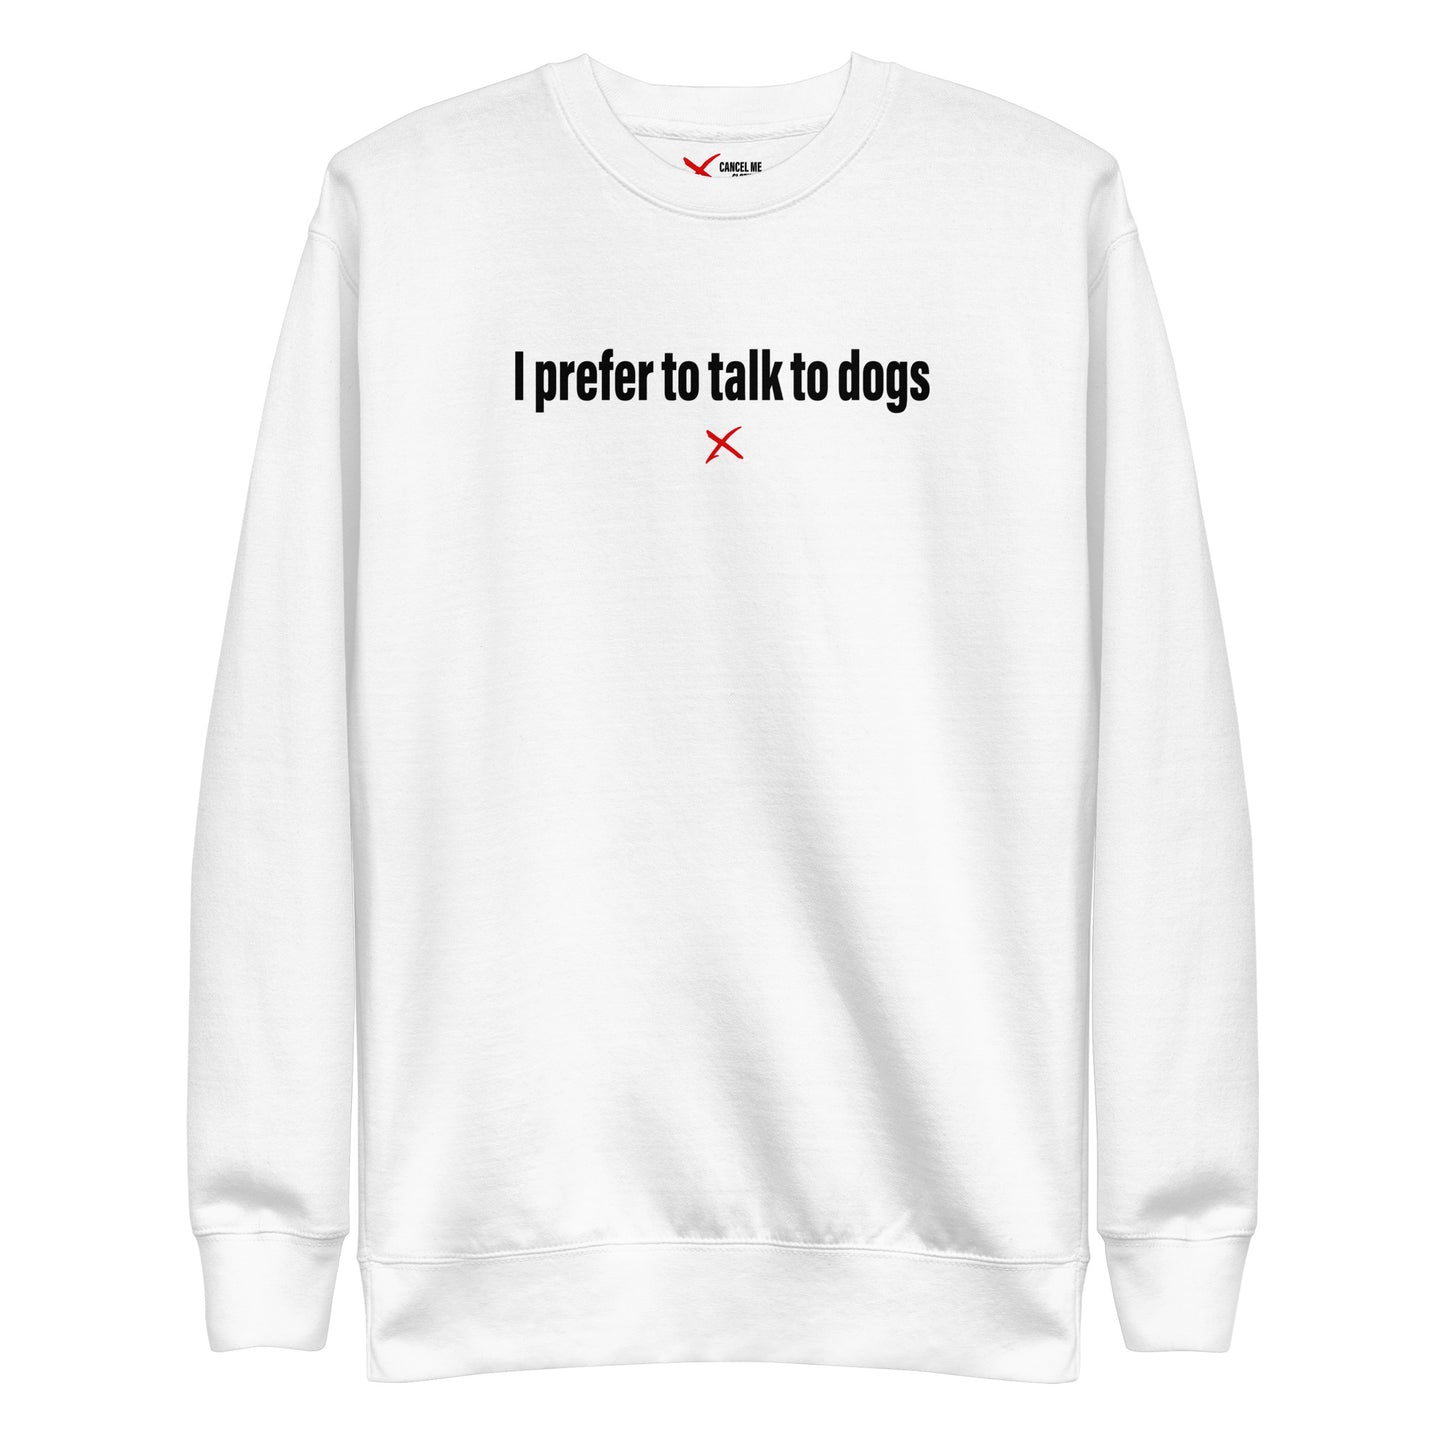 I prefer to talk to dogs - Sweatshirt